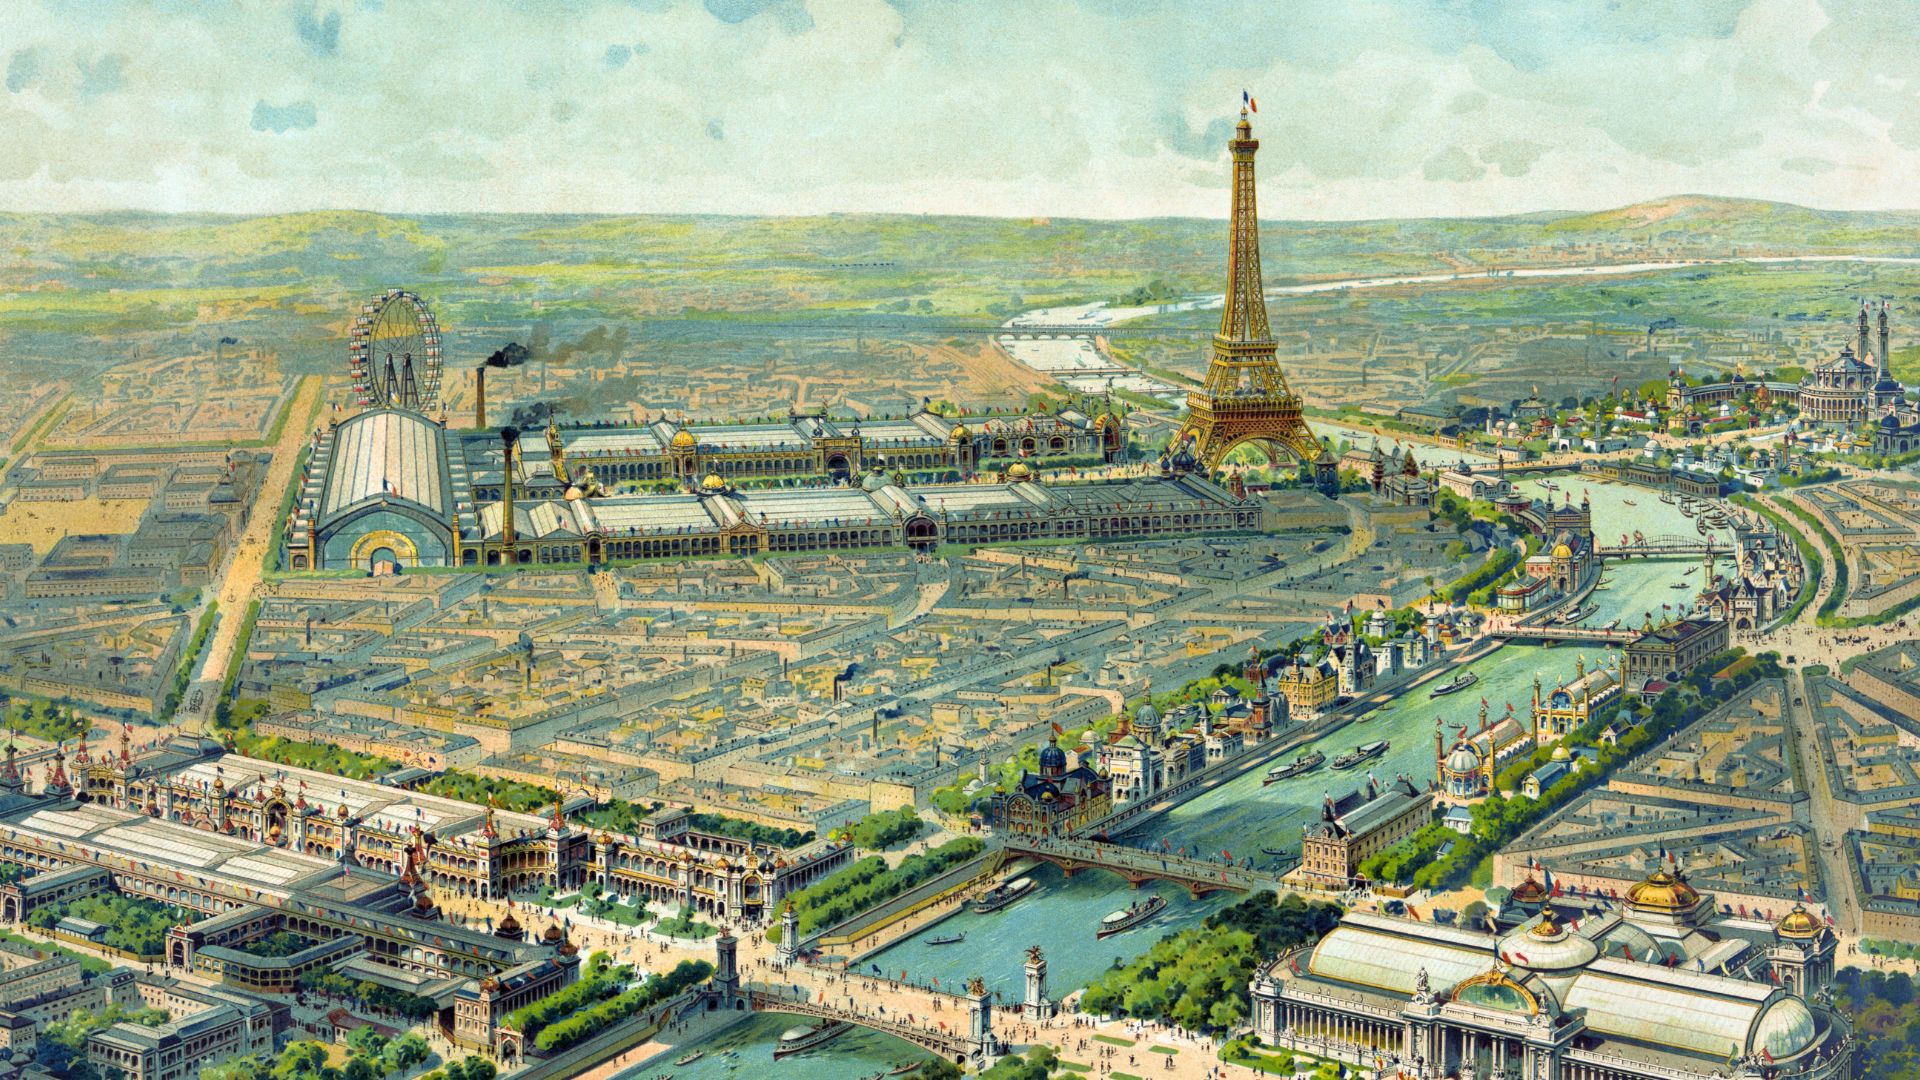 Exposição Universal Paris 1900